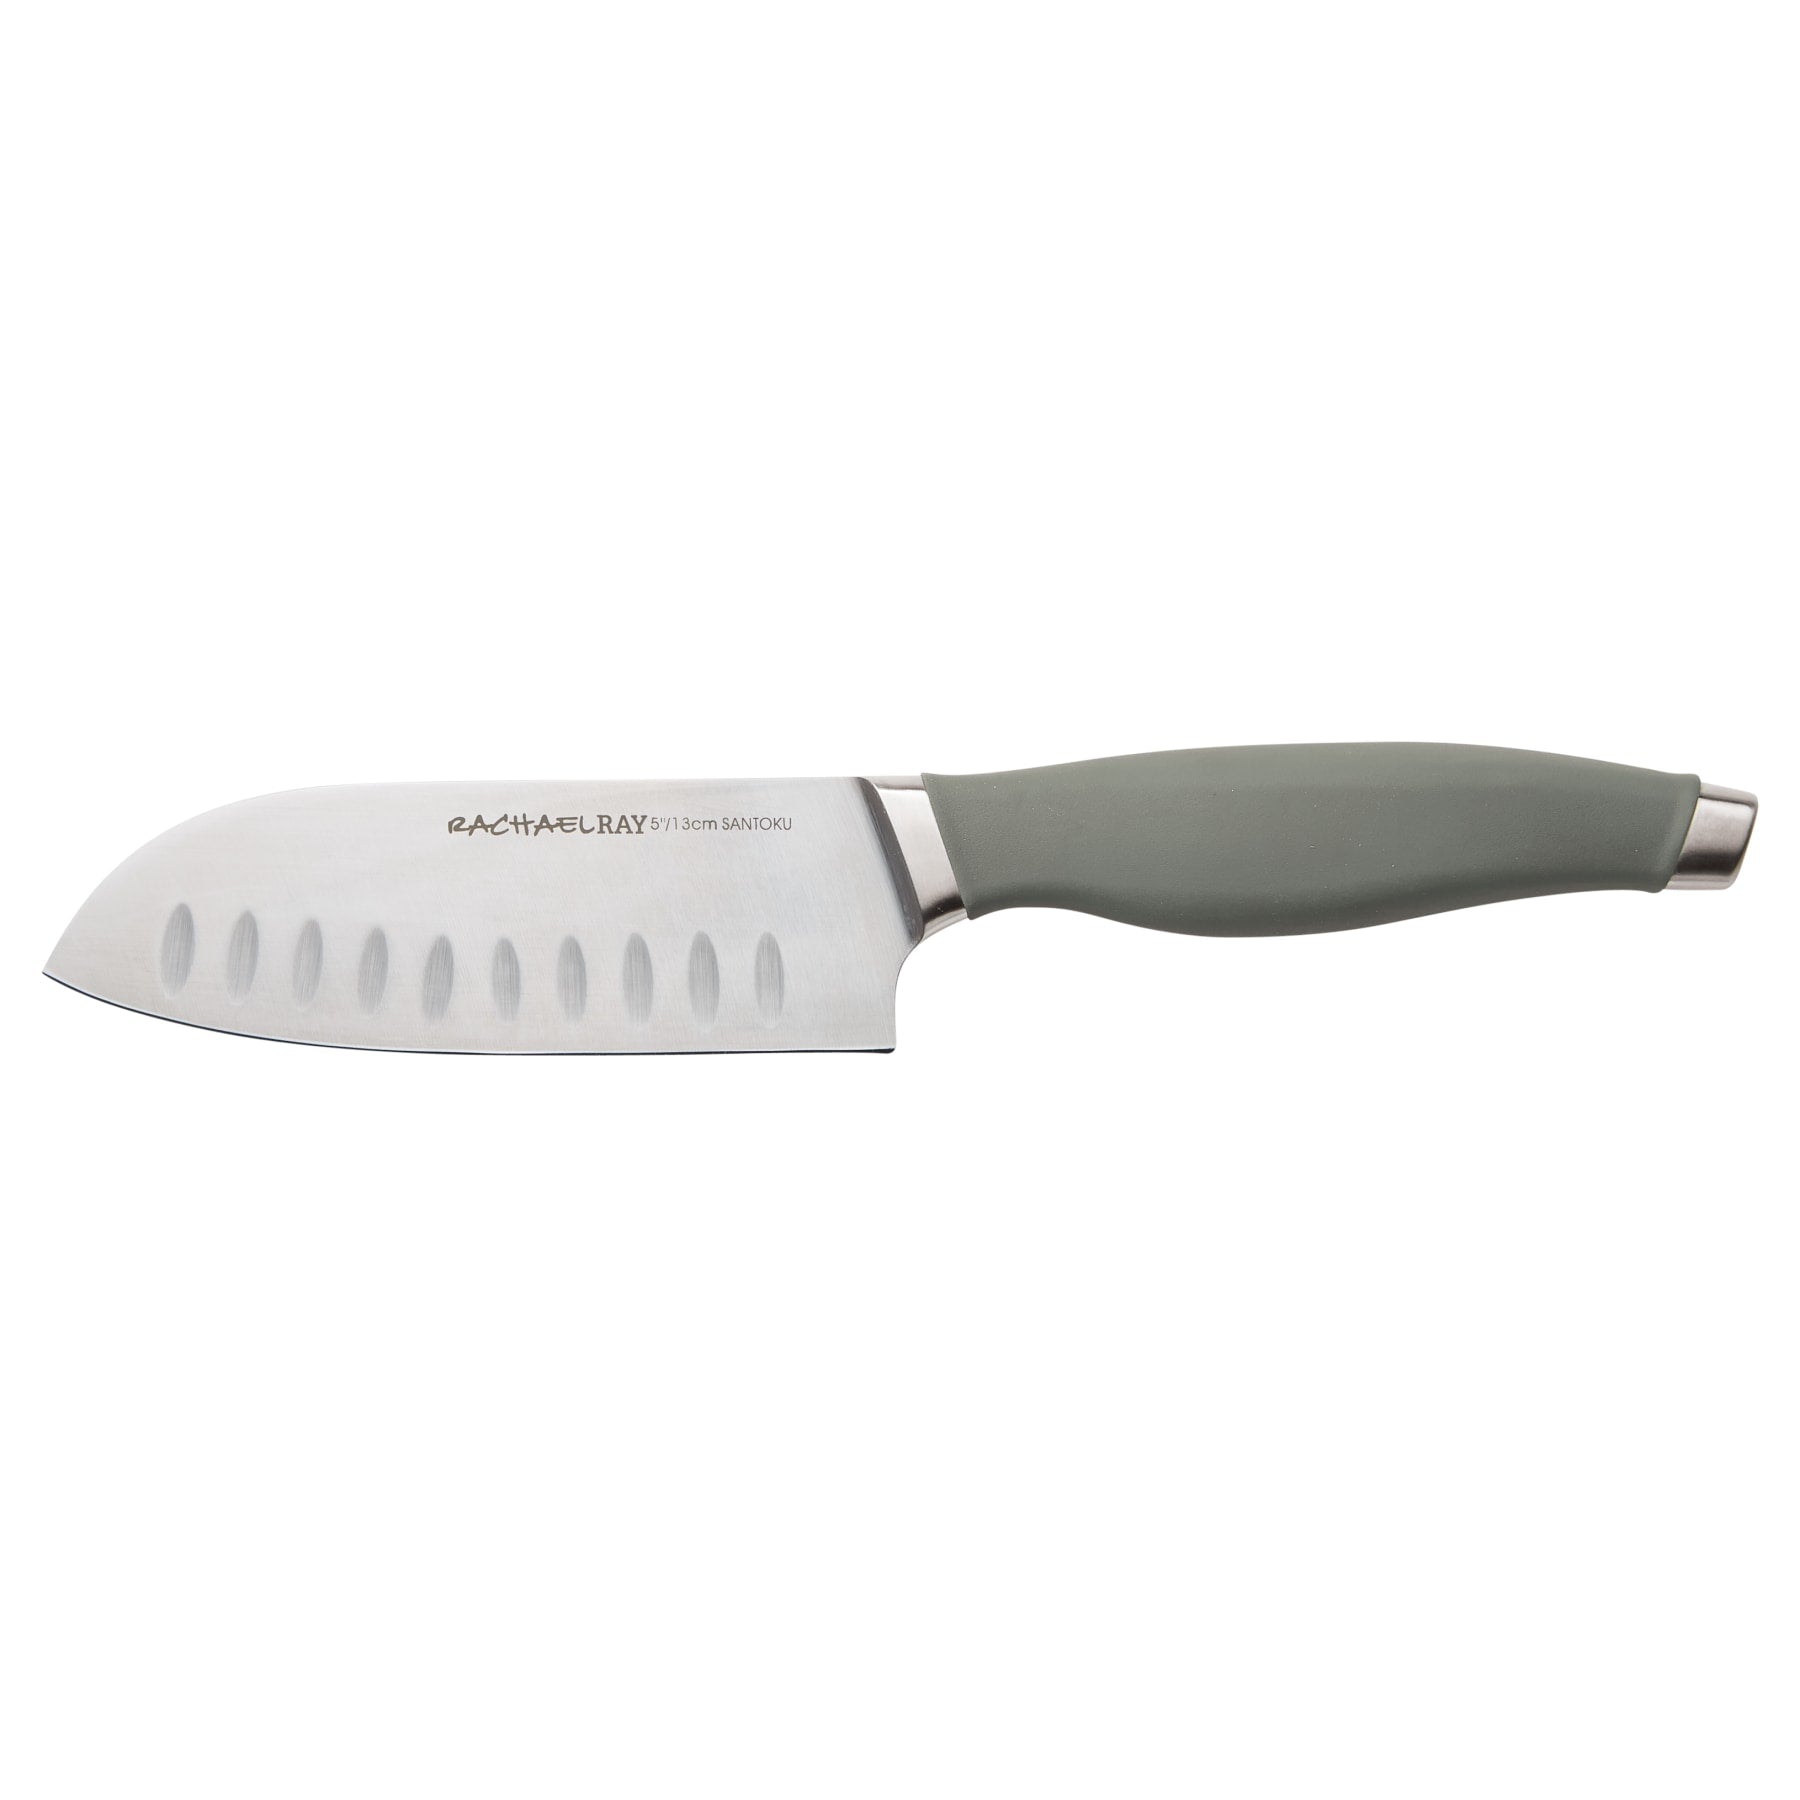 Cutlery 3-Piece Assorted Knife Set